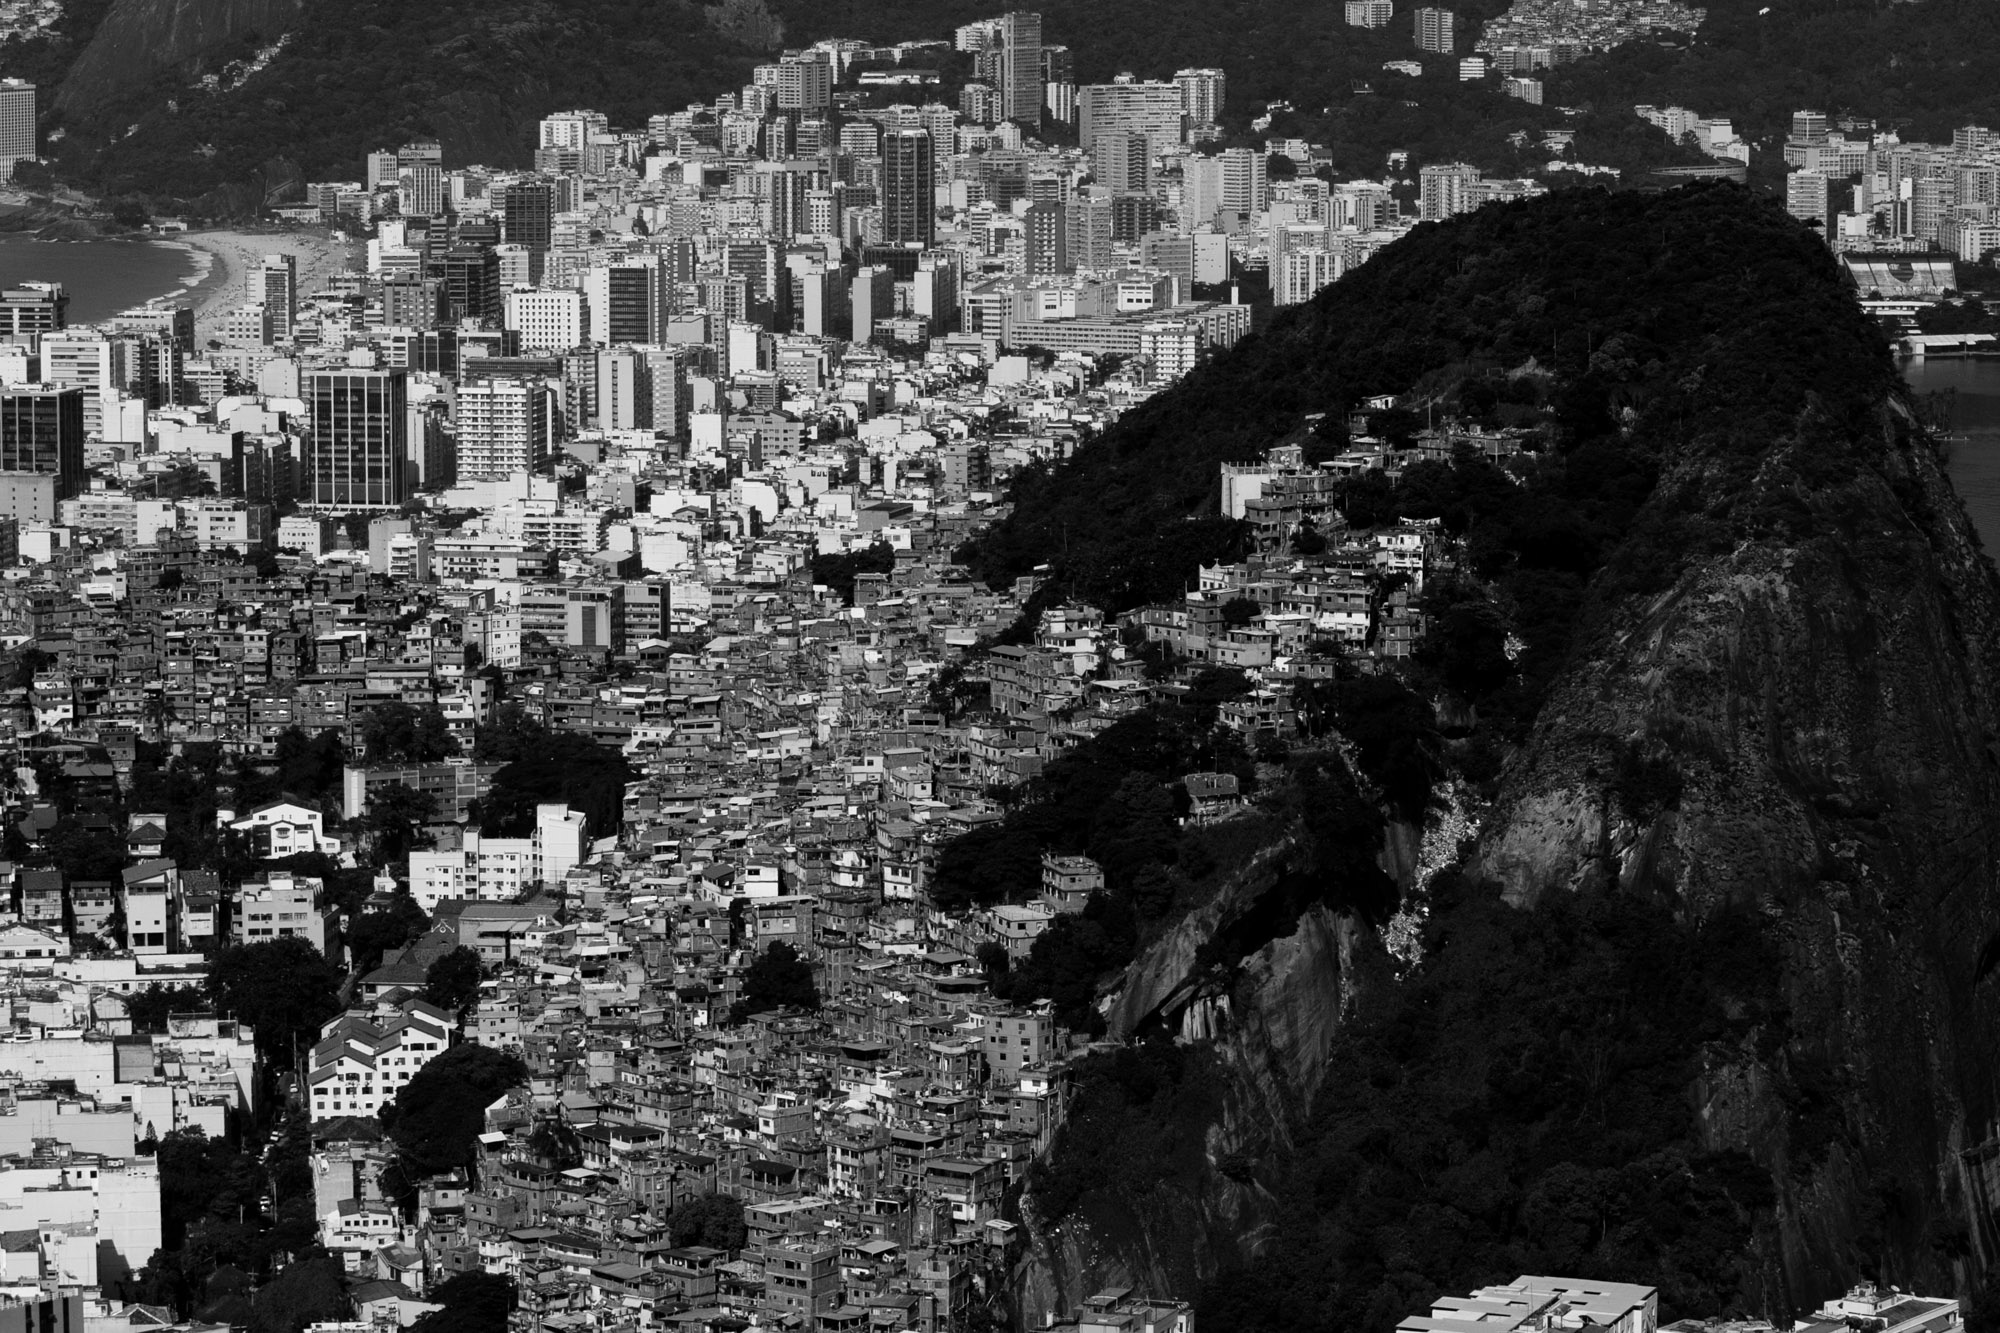 The favela